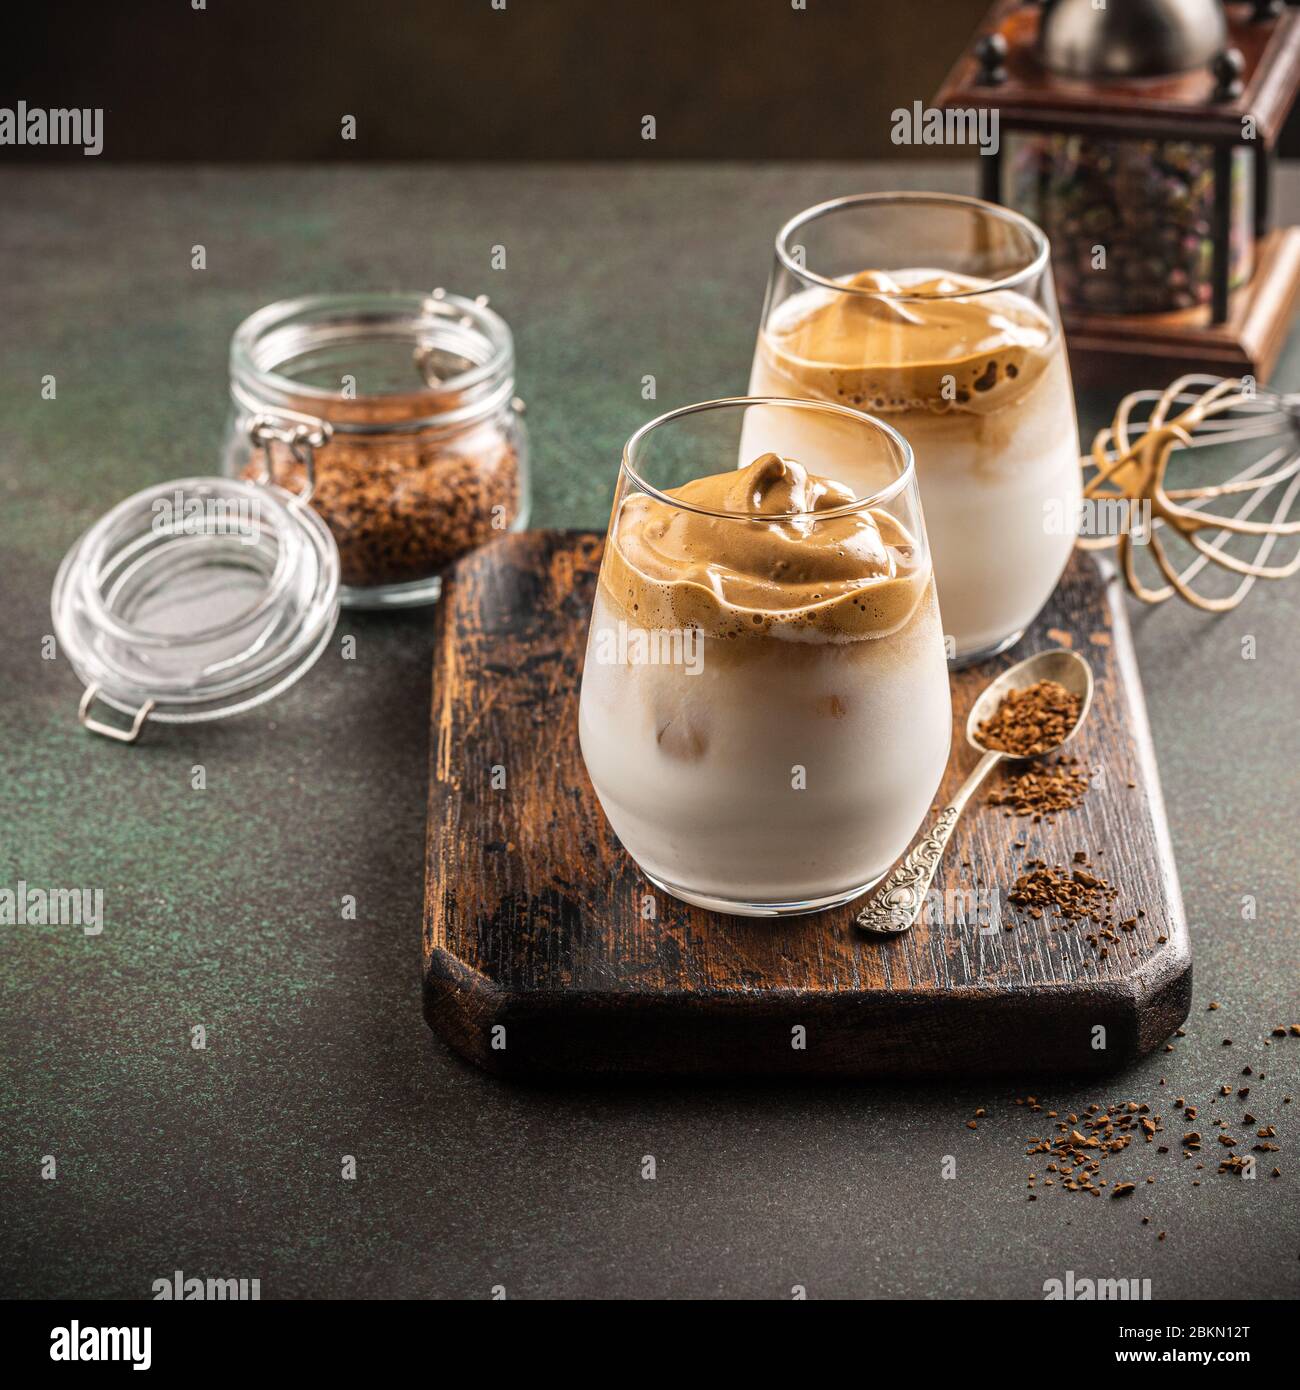 Dalgona coffee in glass cup Stock Photo